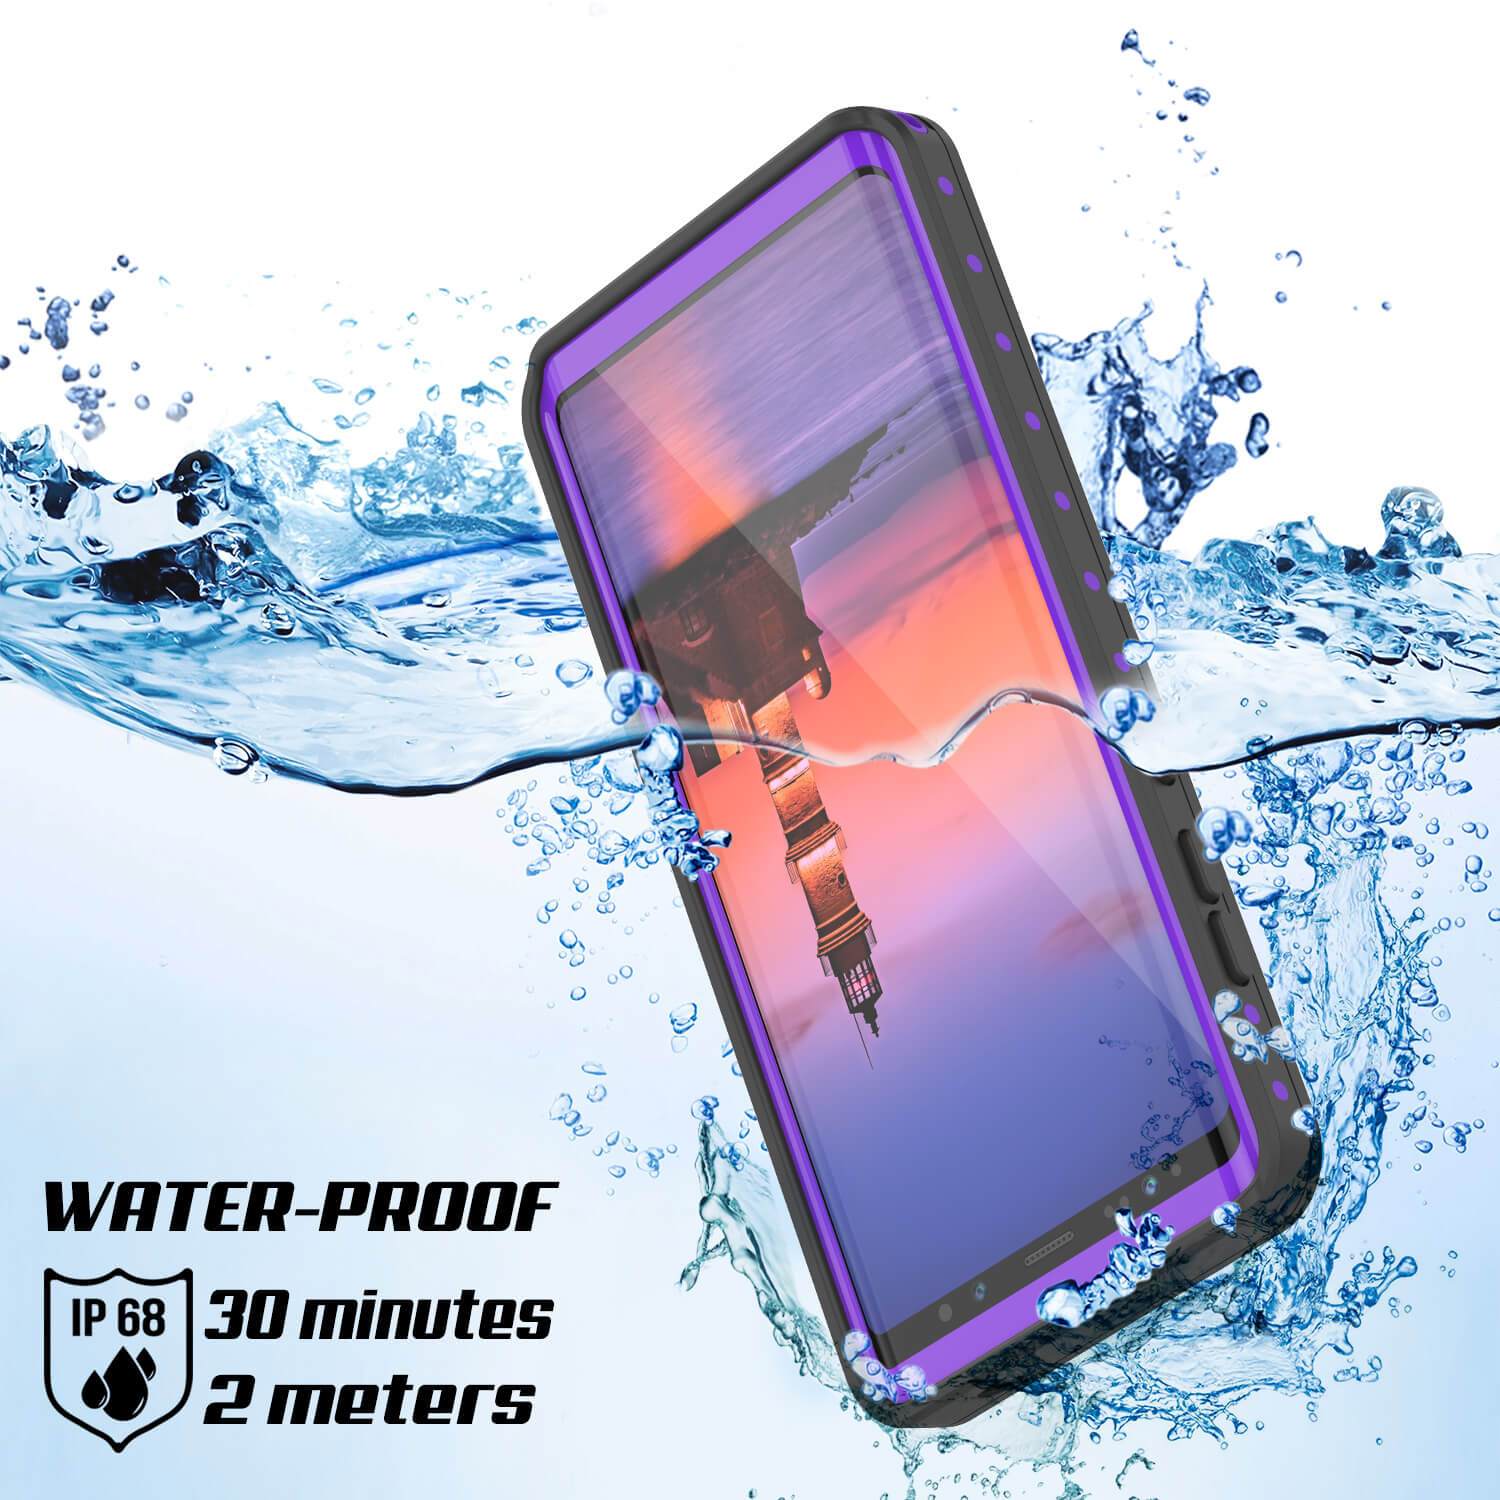 Galaxy Note 9 Waterproof Case PunkCase StudStar Purple Thin 6.6ft Underwater Shock/Snow Proof